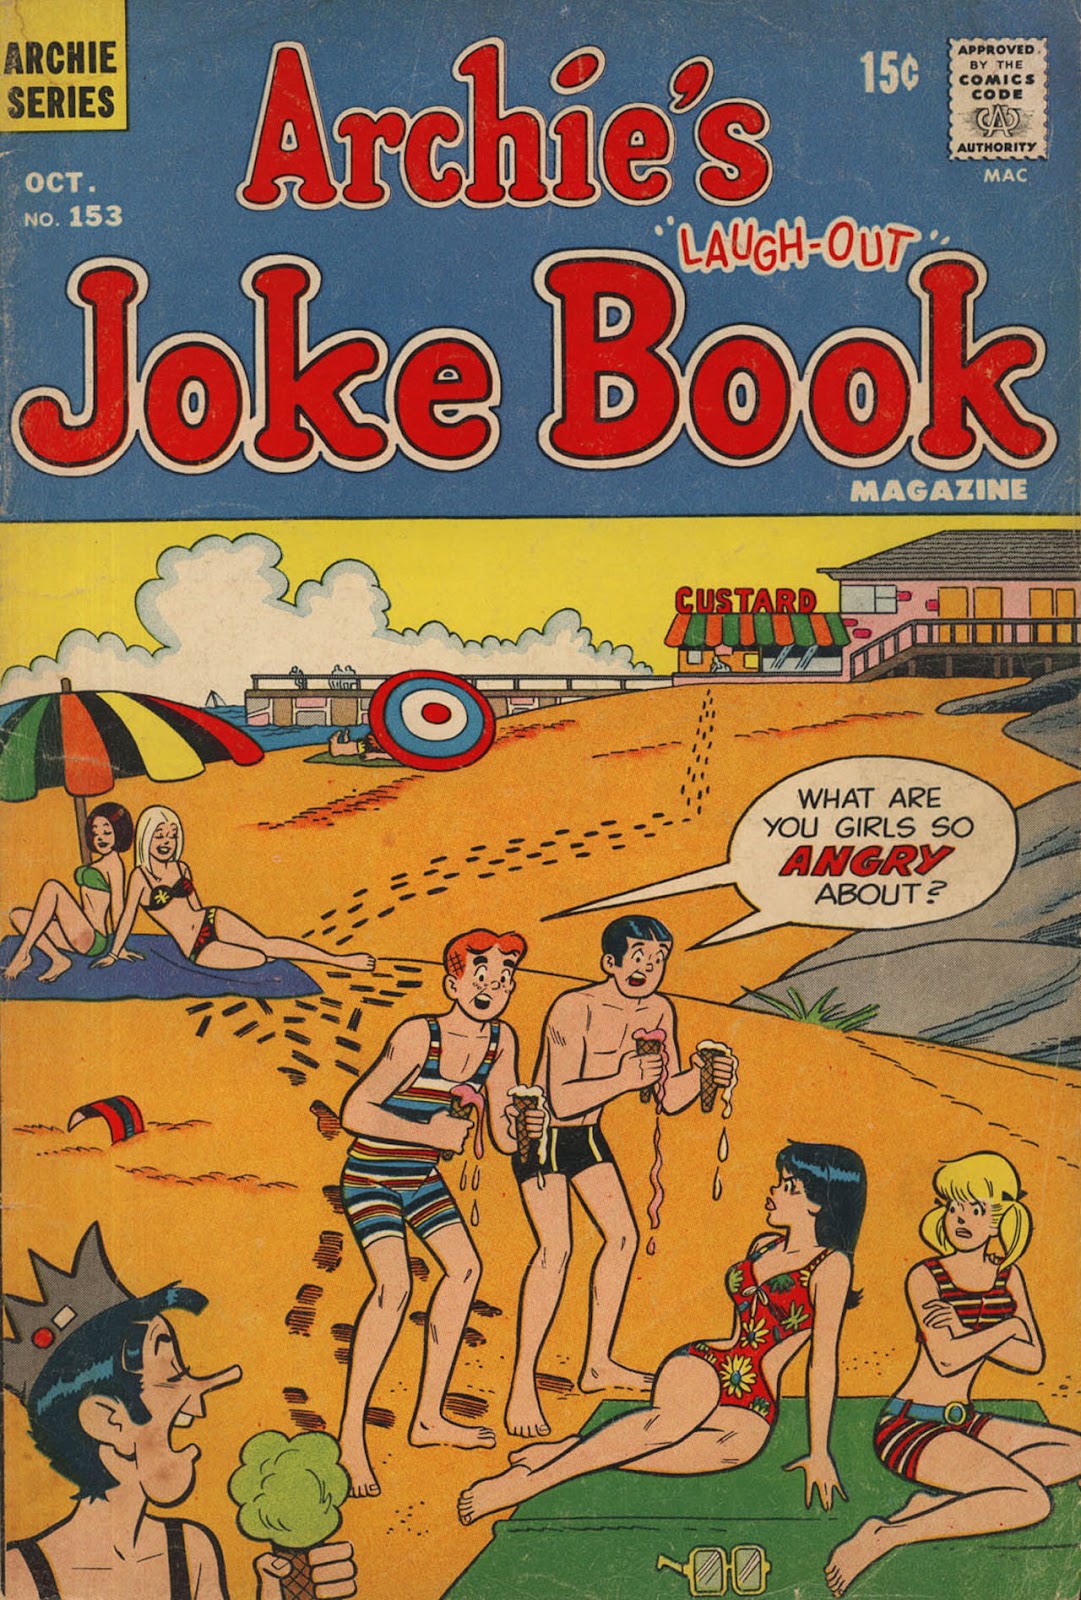 Archie's Joke Book Magazine issue 153 - Page 1